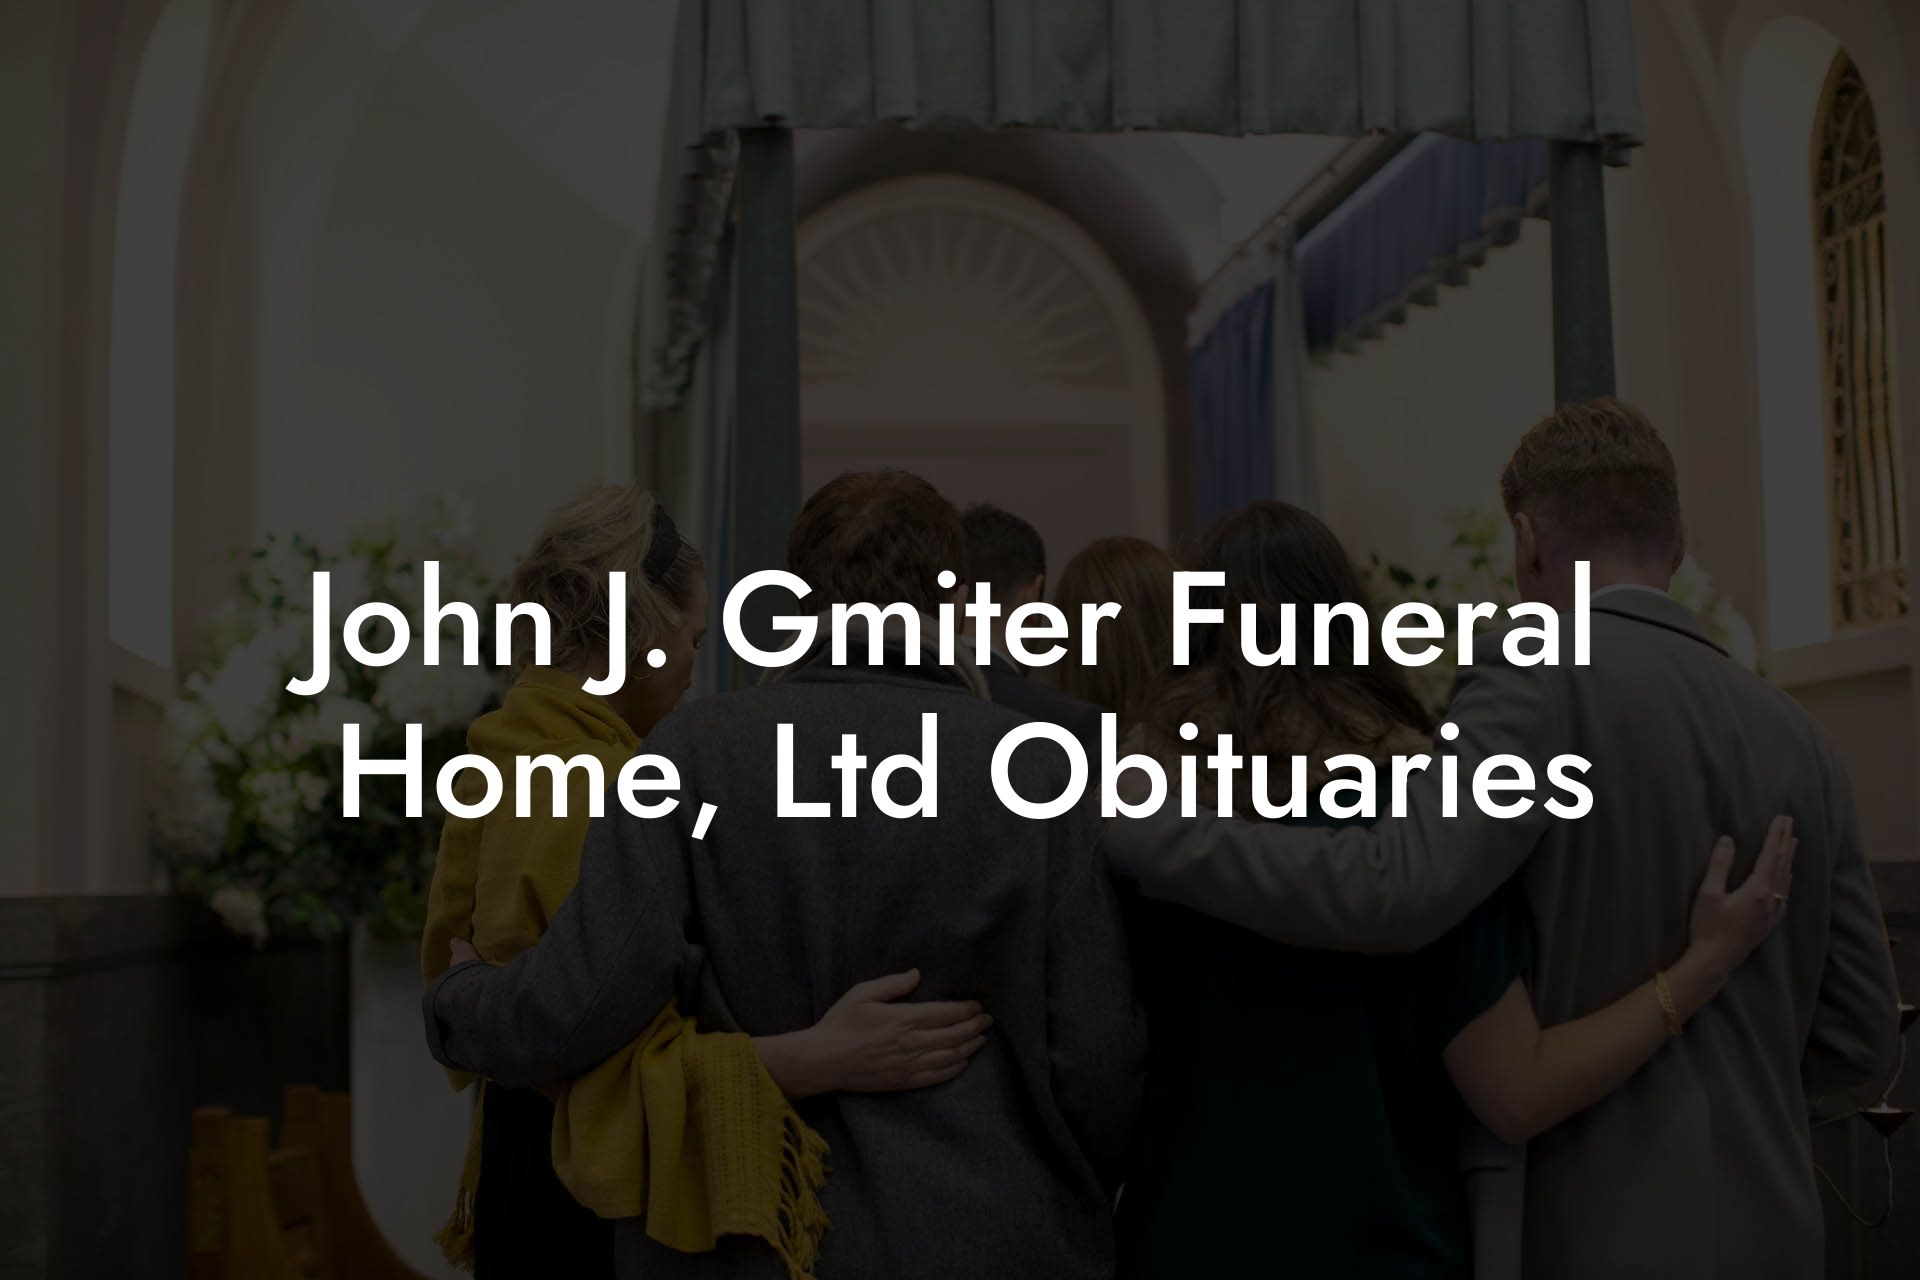 John J. Gmiter Funeral Home, Ltd Obituaries